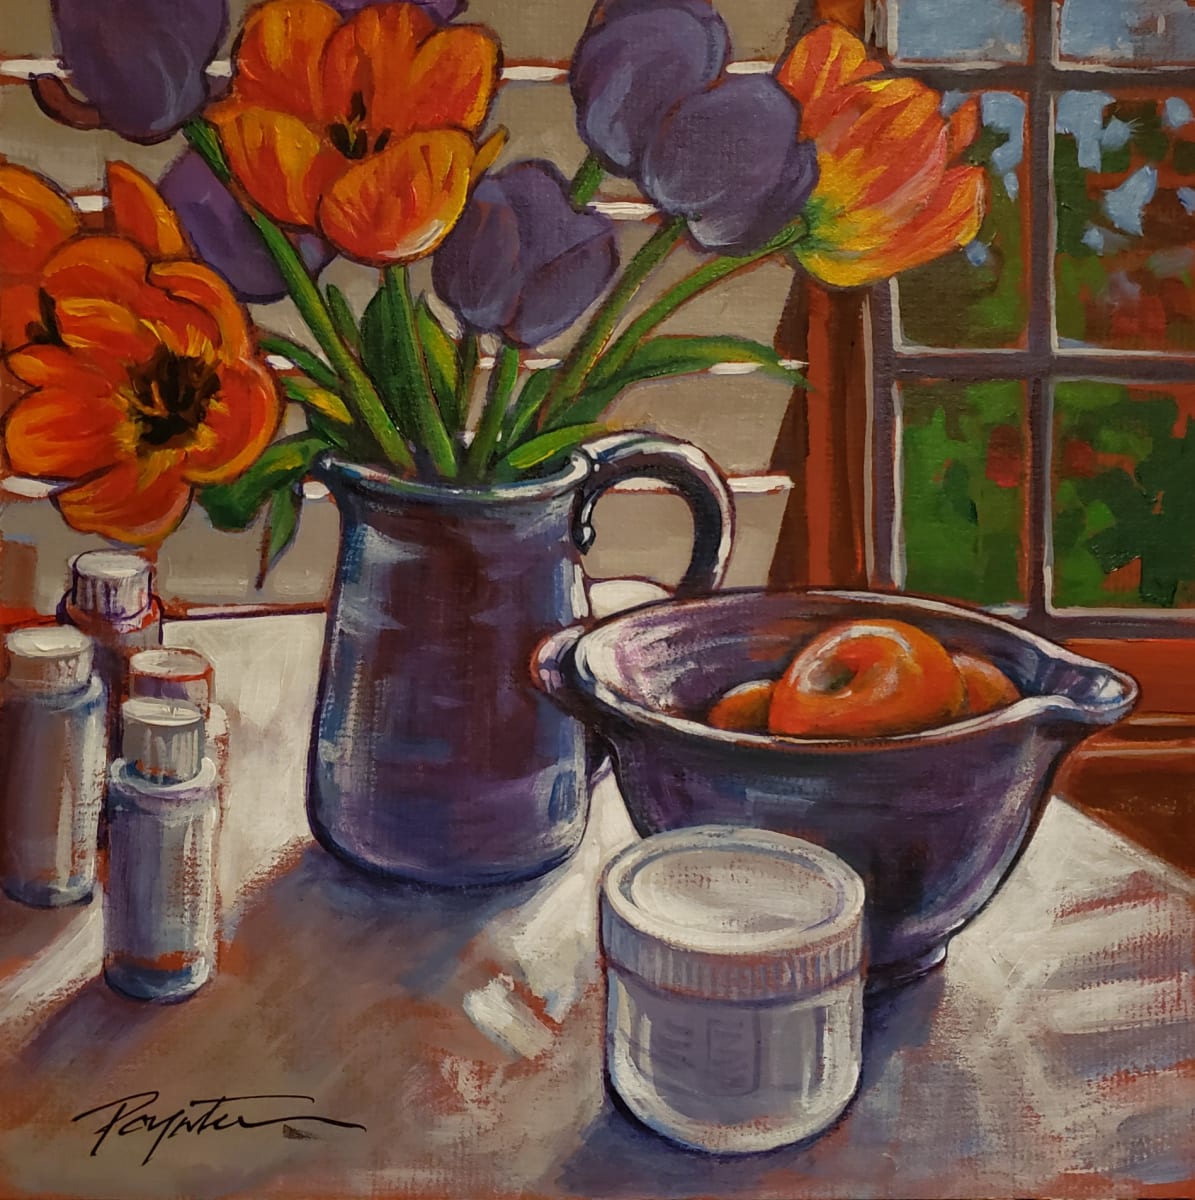 "Tulips & bowl - Studio" by Jan Poynter 